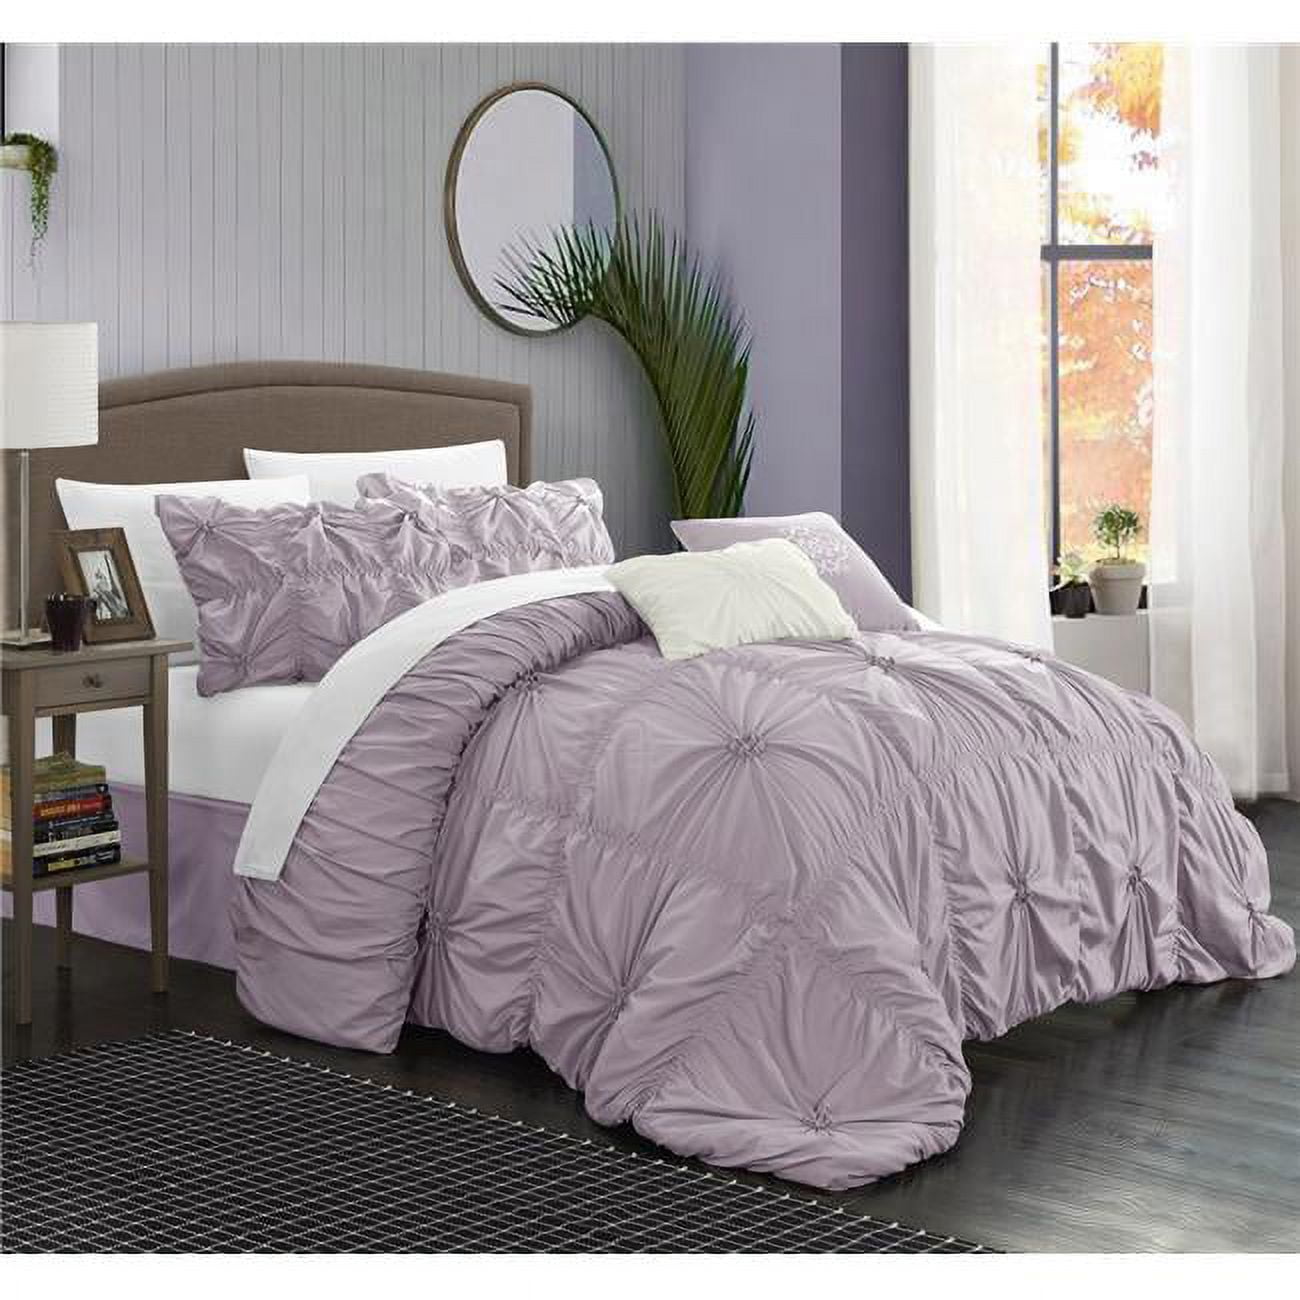 Ramanda Floral Pinch Pleat Ruffled Designer Embellished Comforter Set - Lavender - Queen - 6 Piece